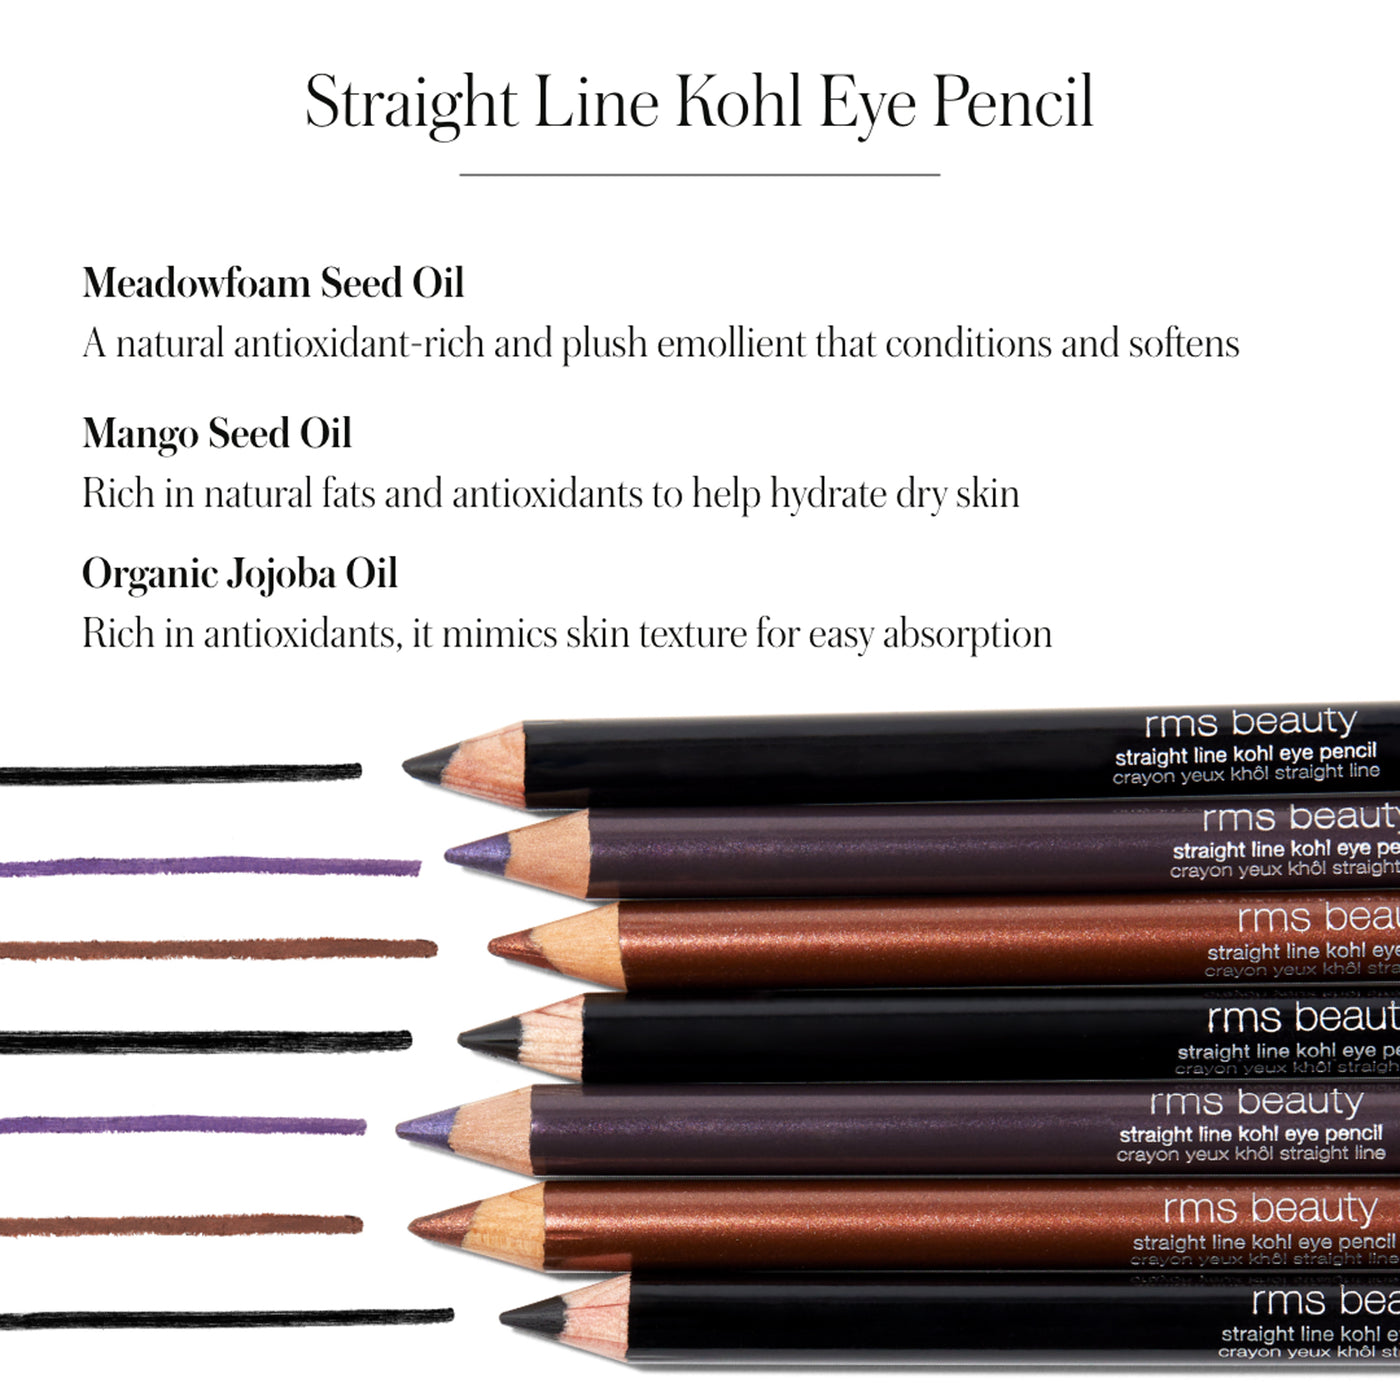 RMS Beauty Straight Line Kohl Eye Pencil in bronze